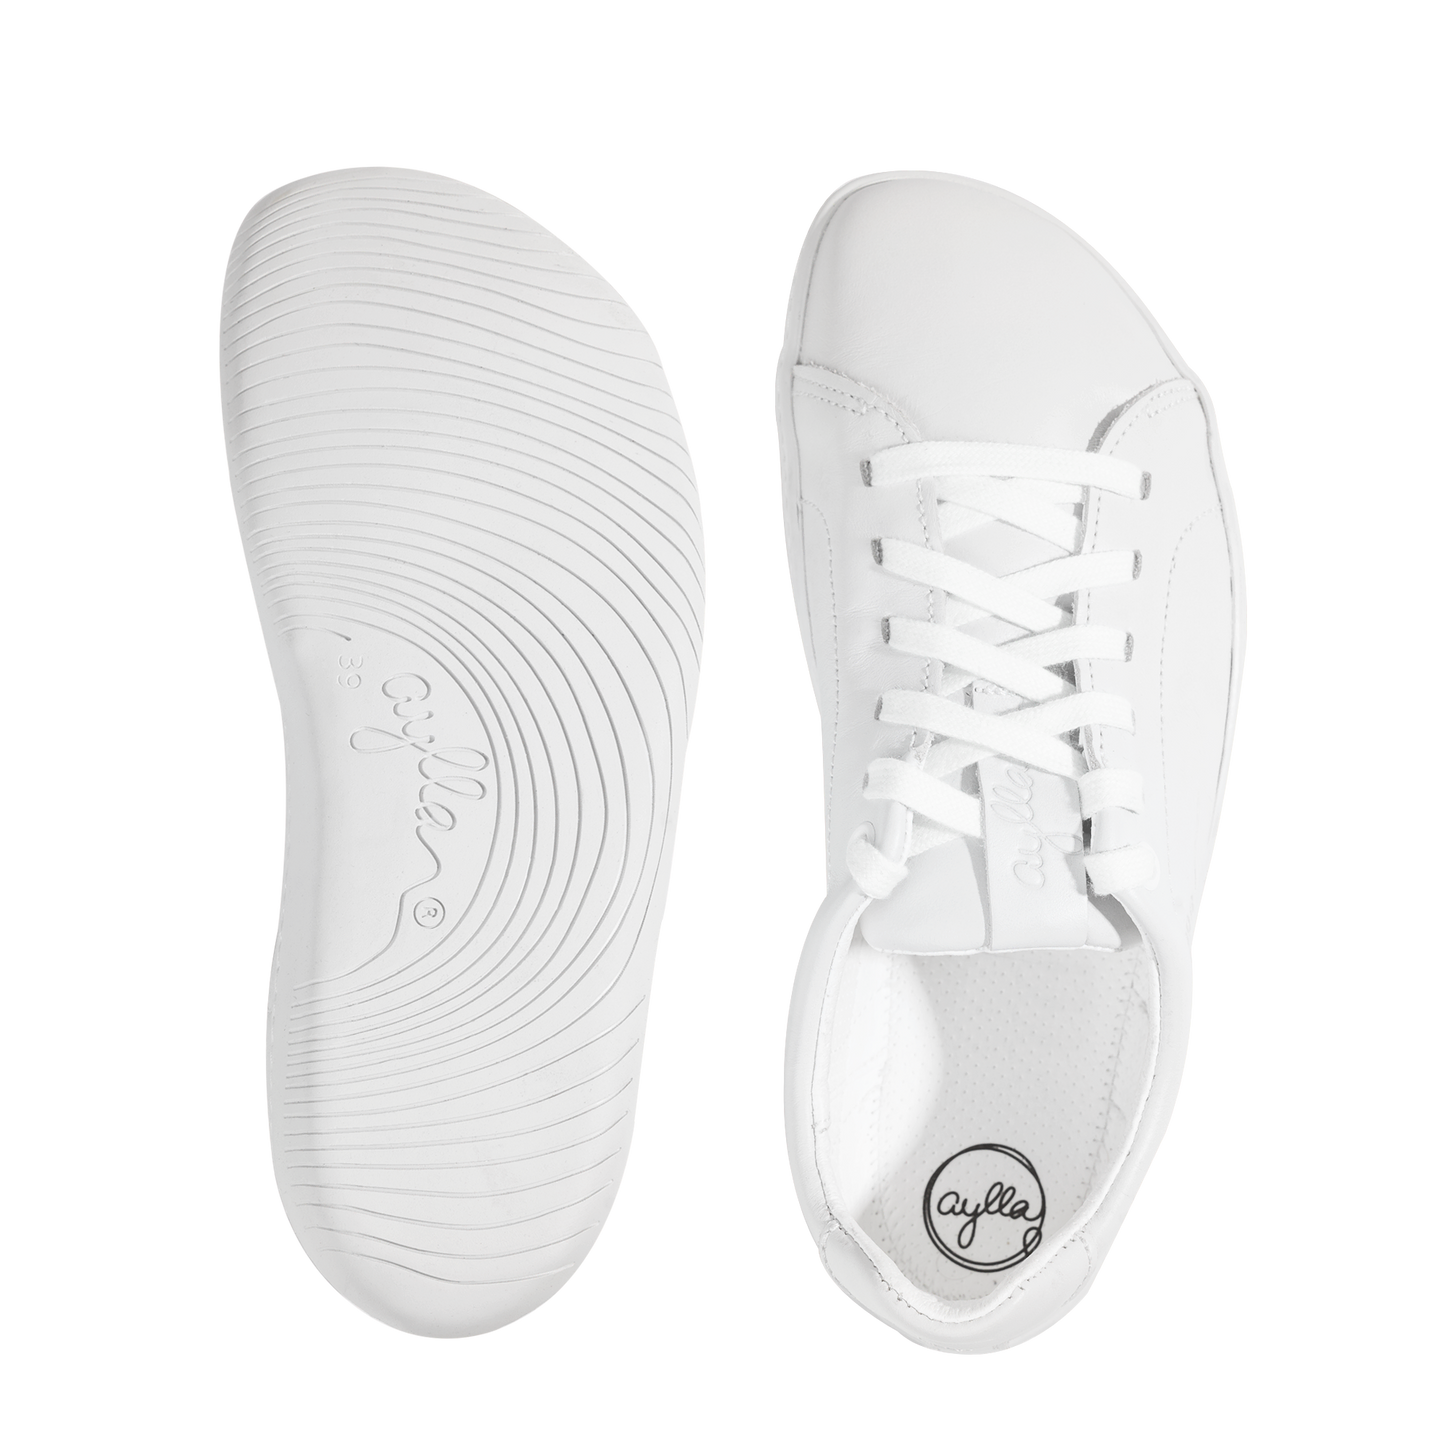 Aylla Keck Womens barfods sneakers i læder til kvinder i farven white / white, top